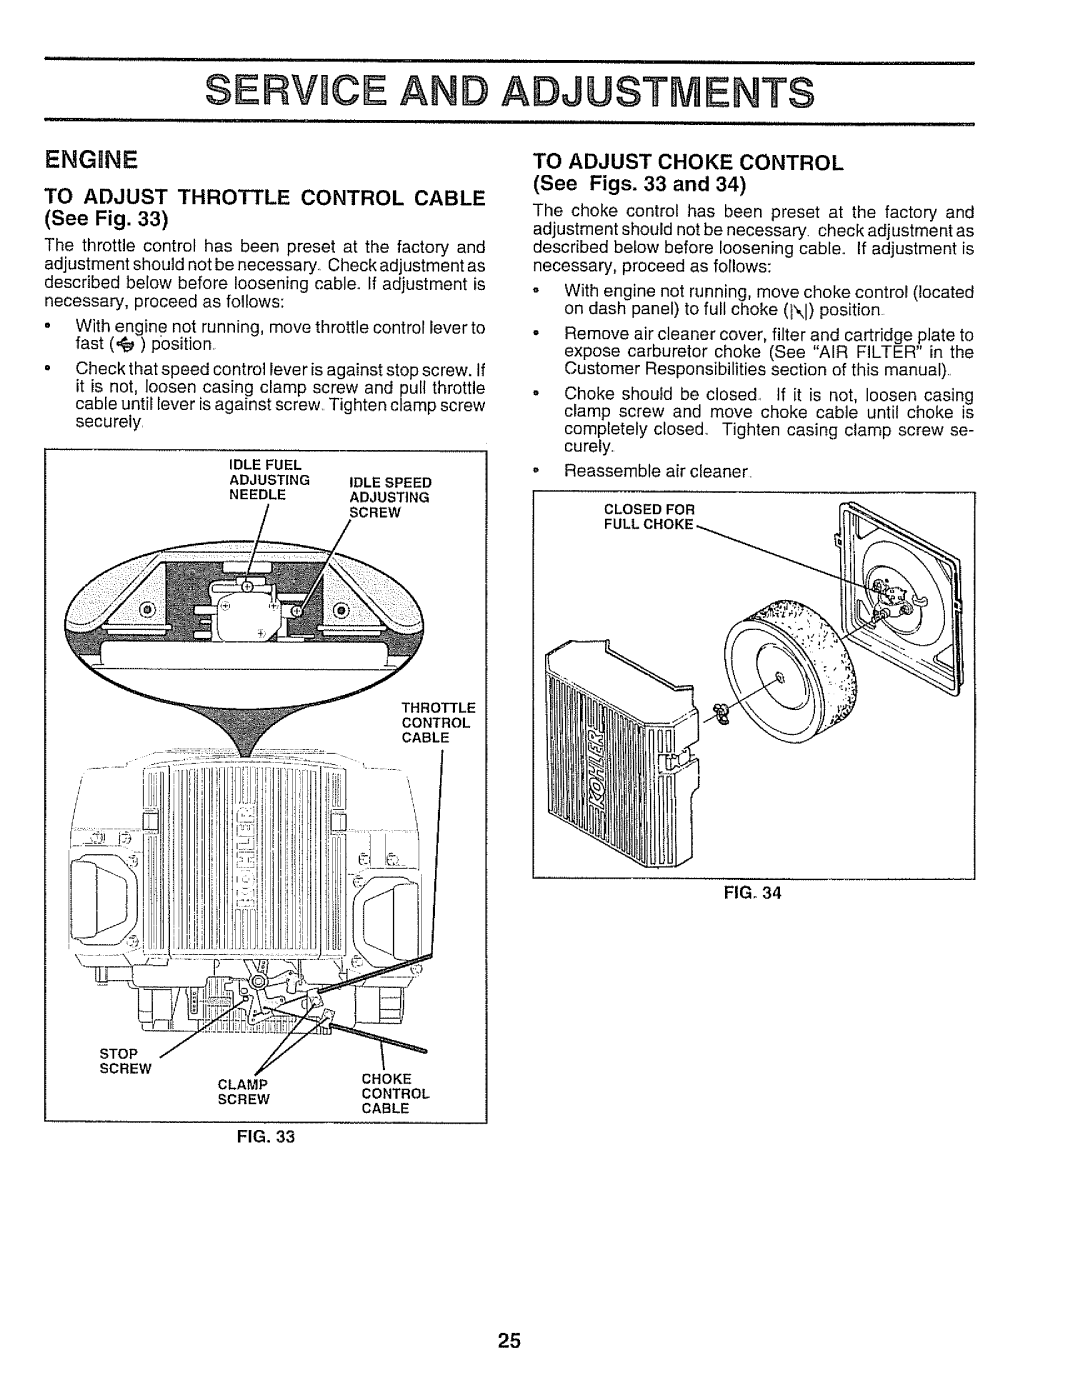 Sears 917.250551 manual Servuce Adjustments, See Figs. 33 and, Engine 